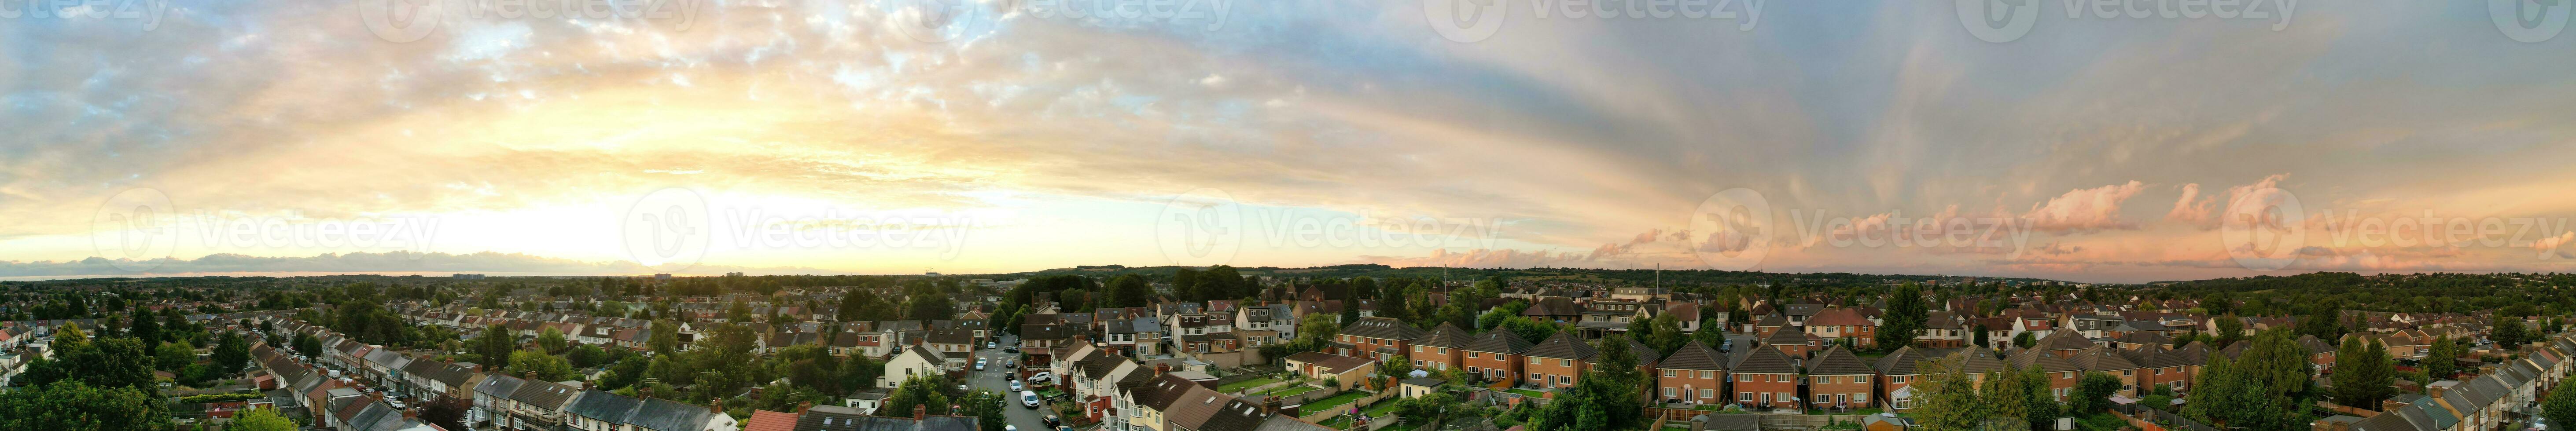 antenn antal fot av hus distrikt av norr luton stad av England, Storbritannien. foto